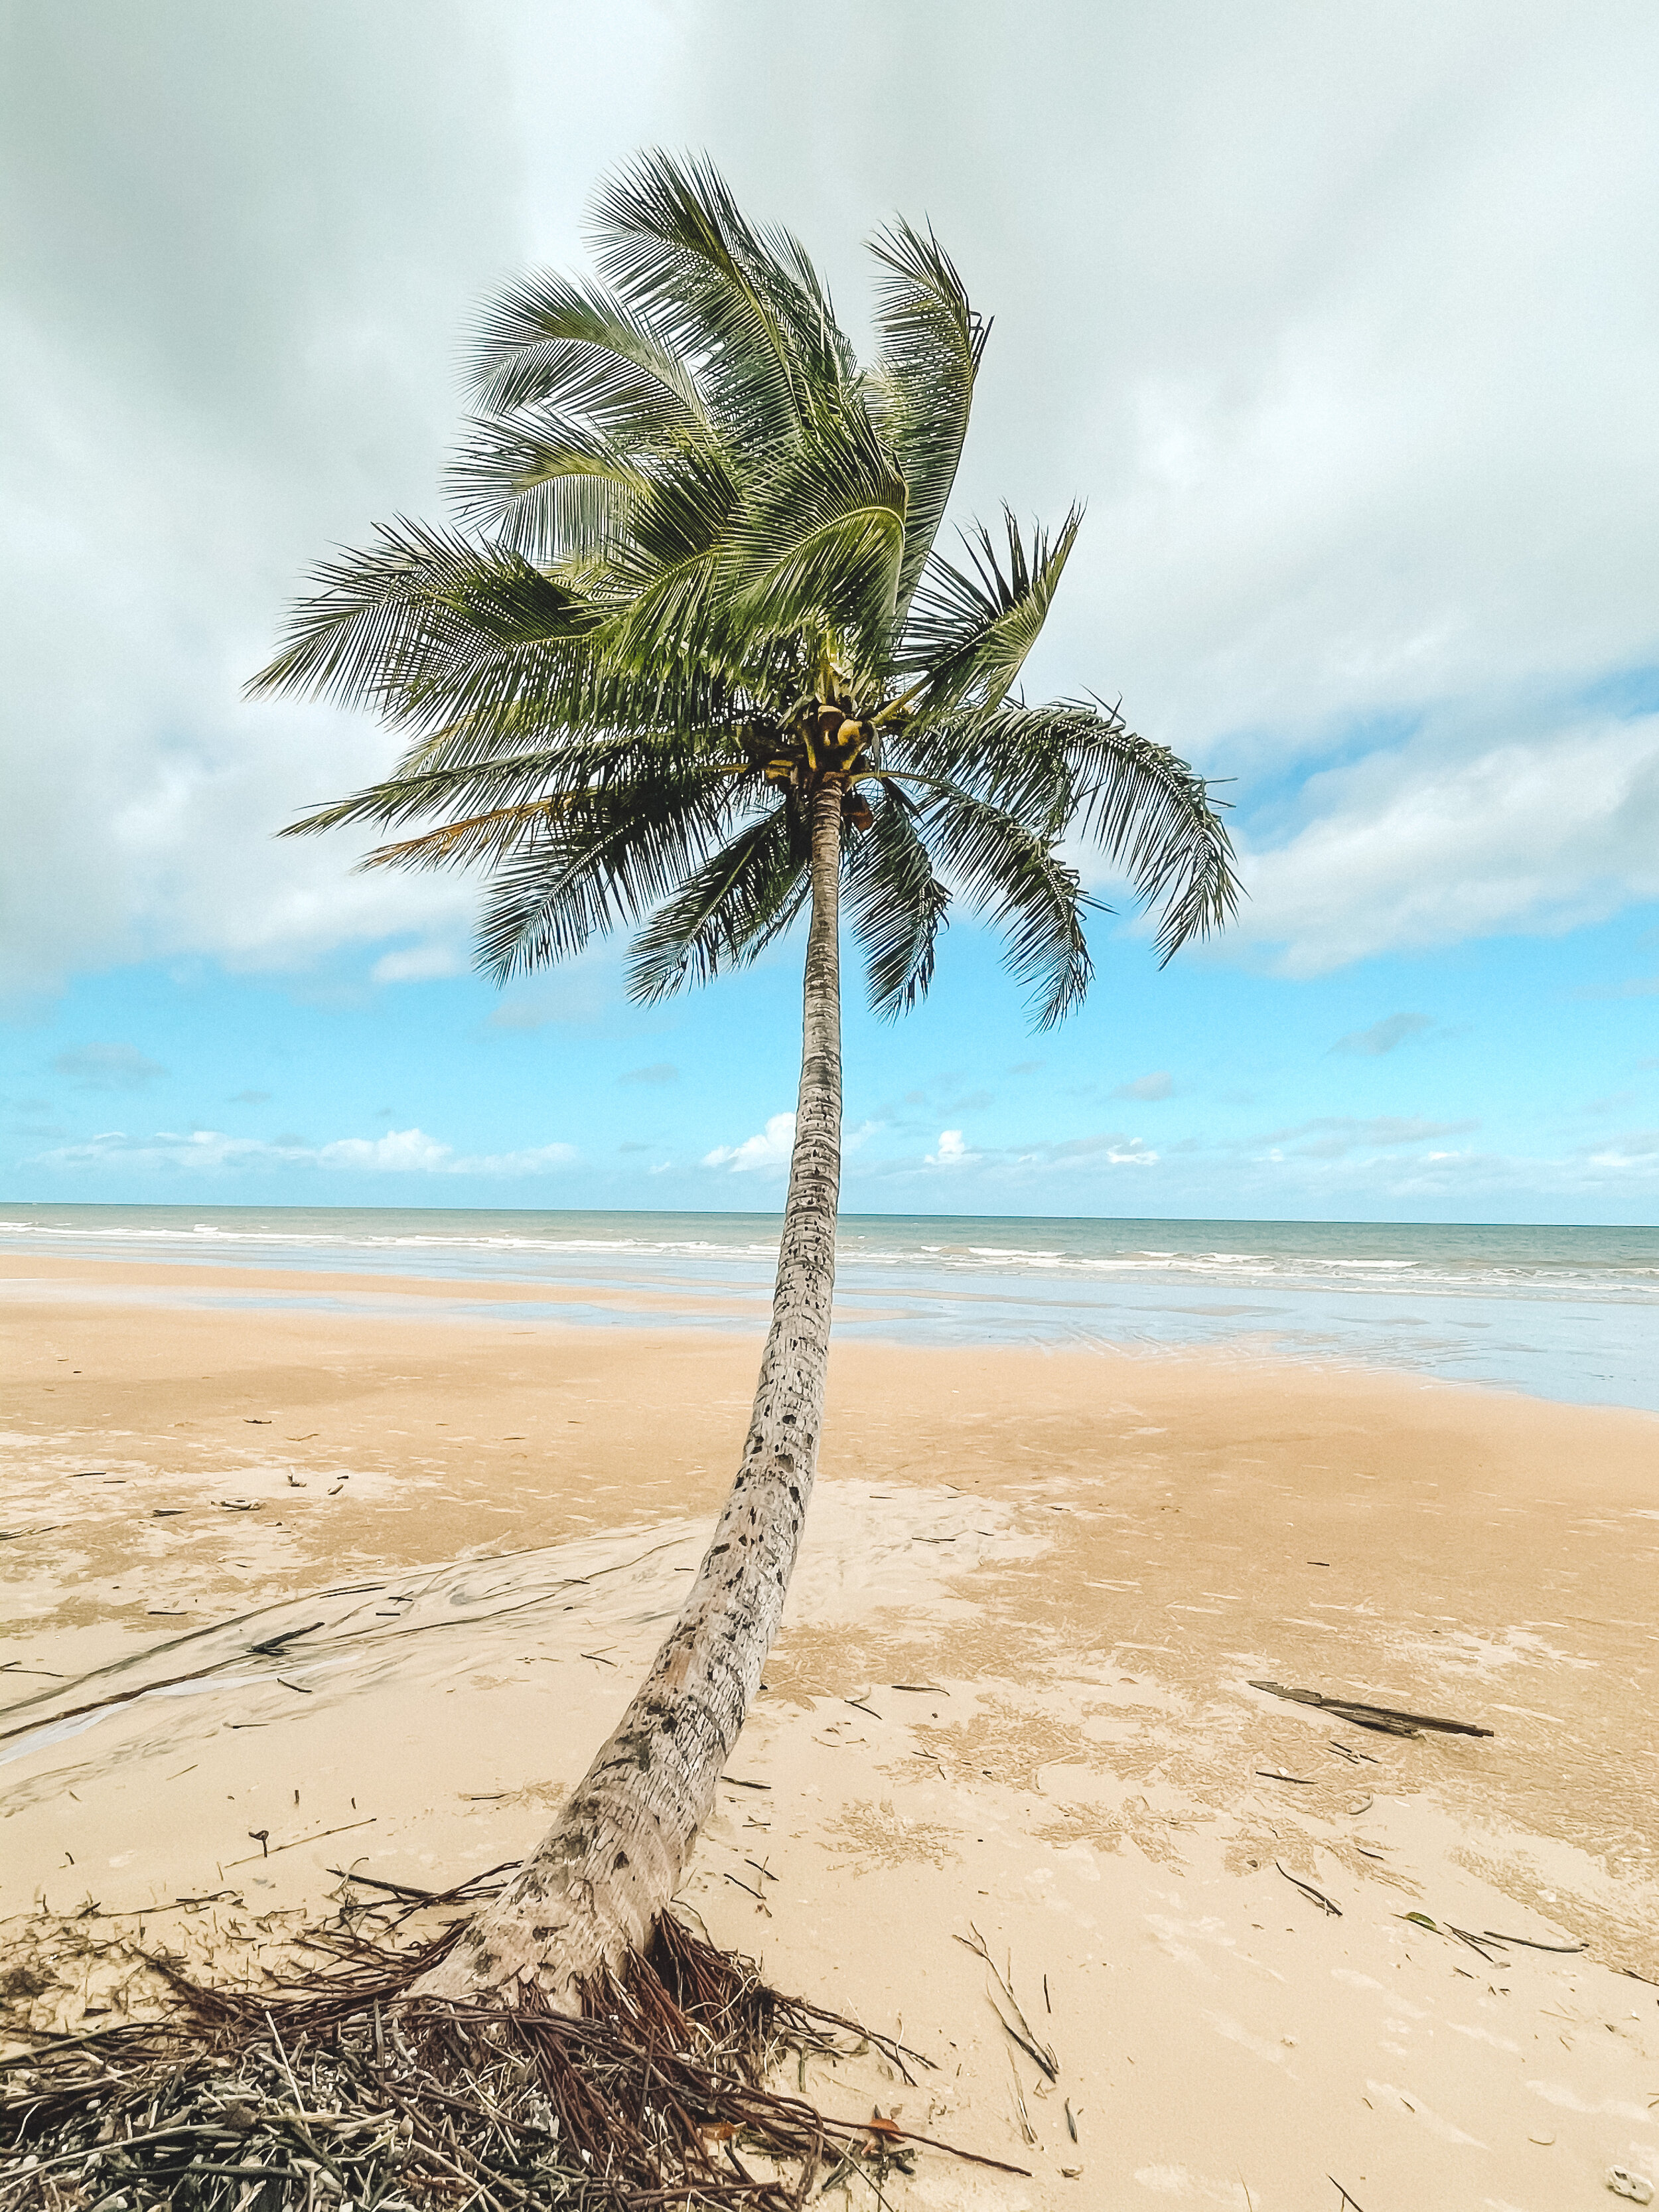 Palmier solitaire - Mission Beach - Tropical North Queensland (QLD) - Australie